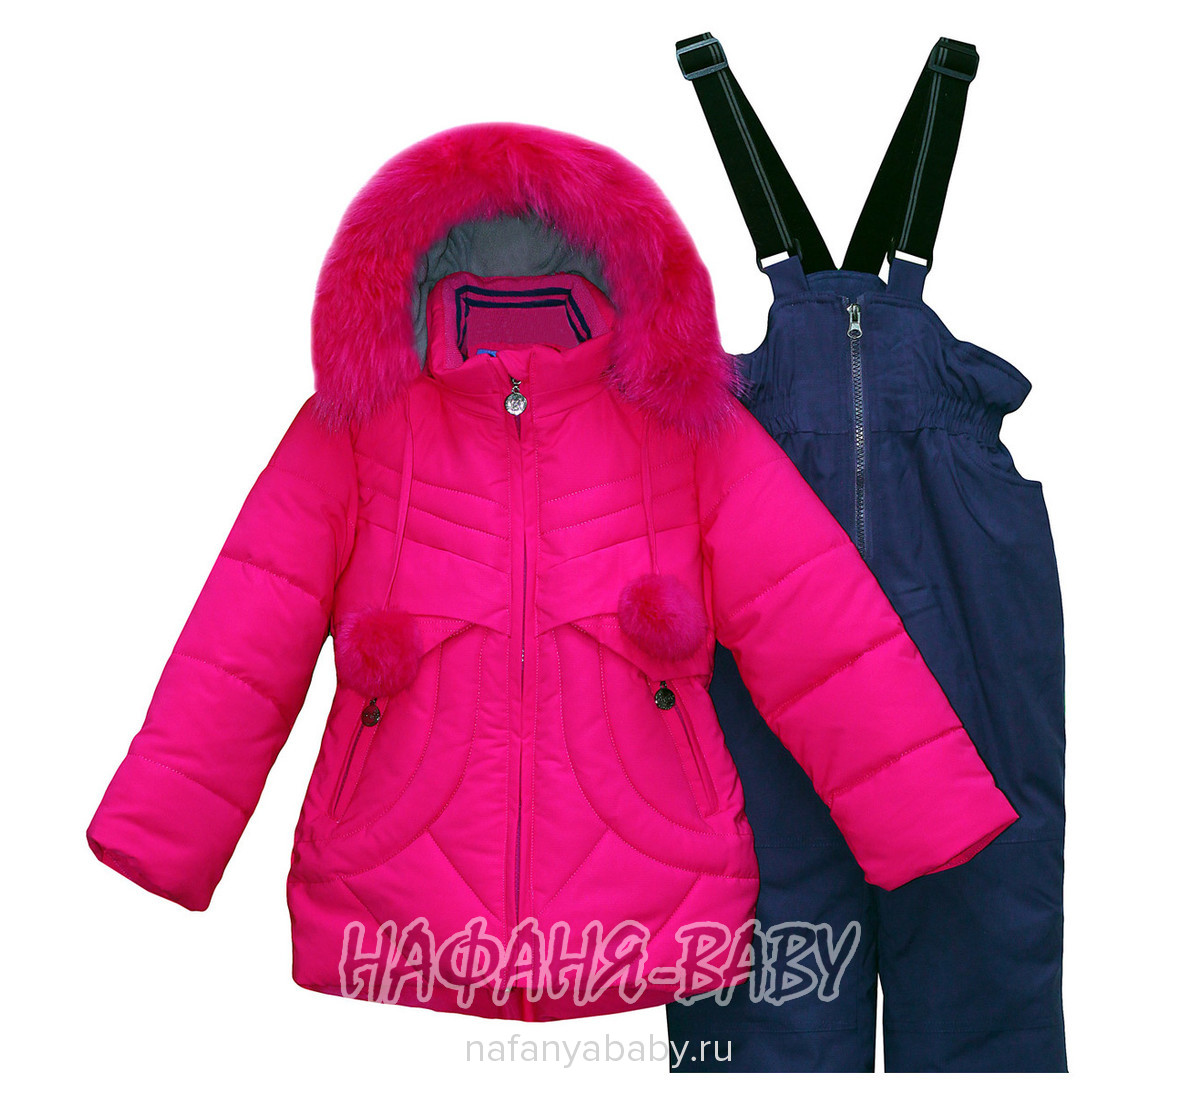 Зимний костюм (куртка+полукомбинезон) BUSCAAP арт: 598, 5-9 лет, 1-4 года, оптом Китай (Пекин)